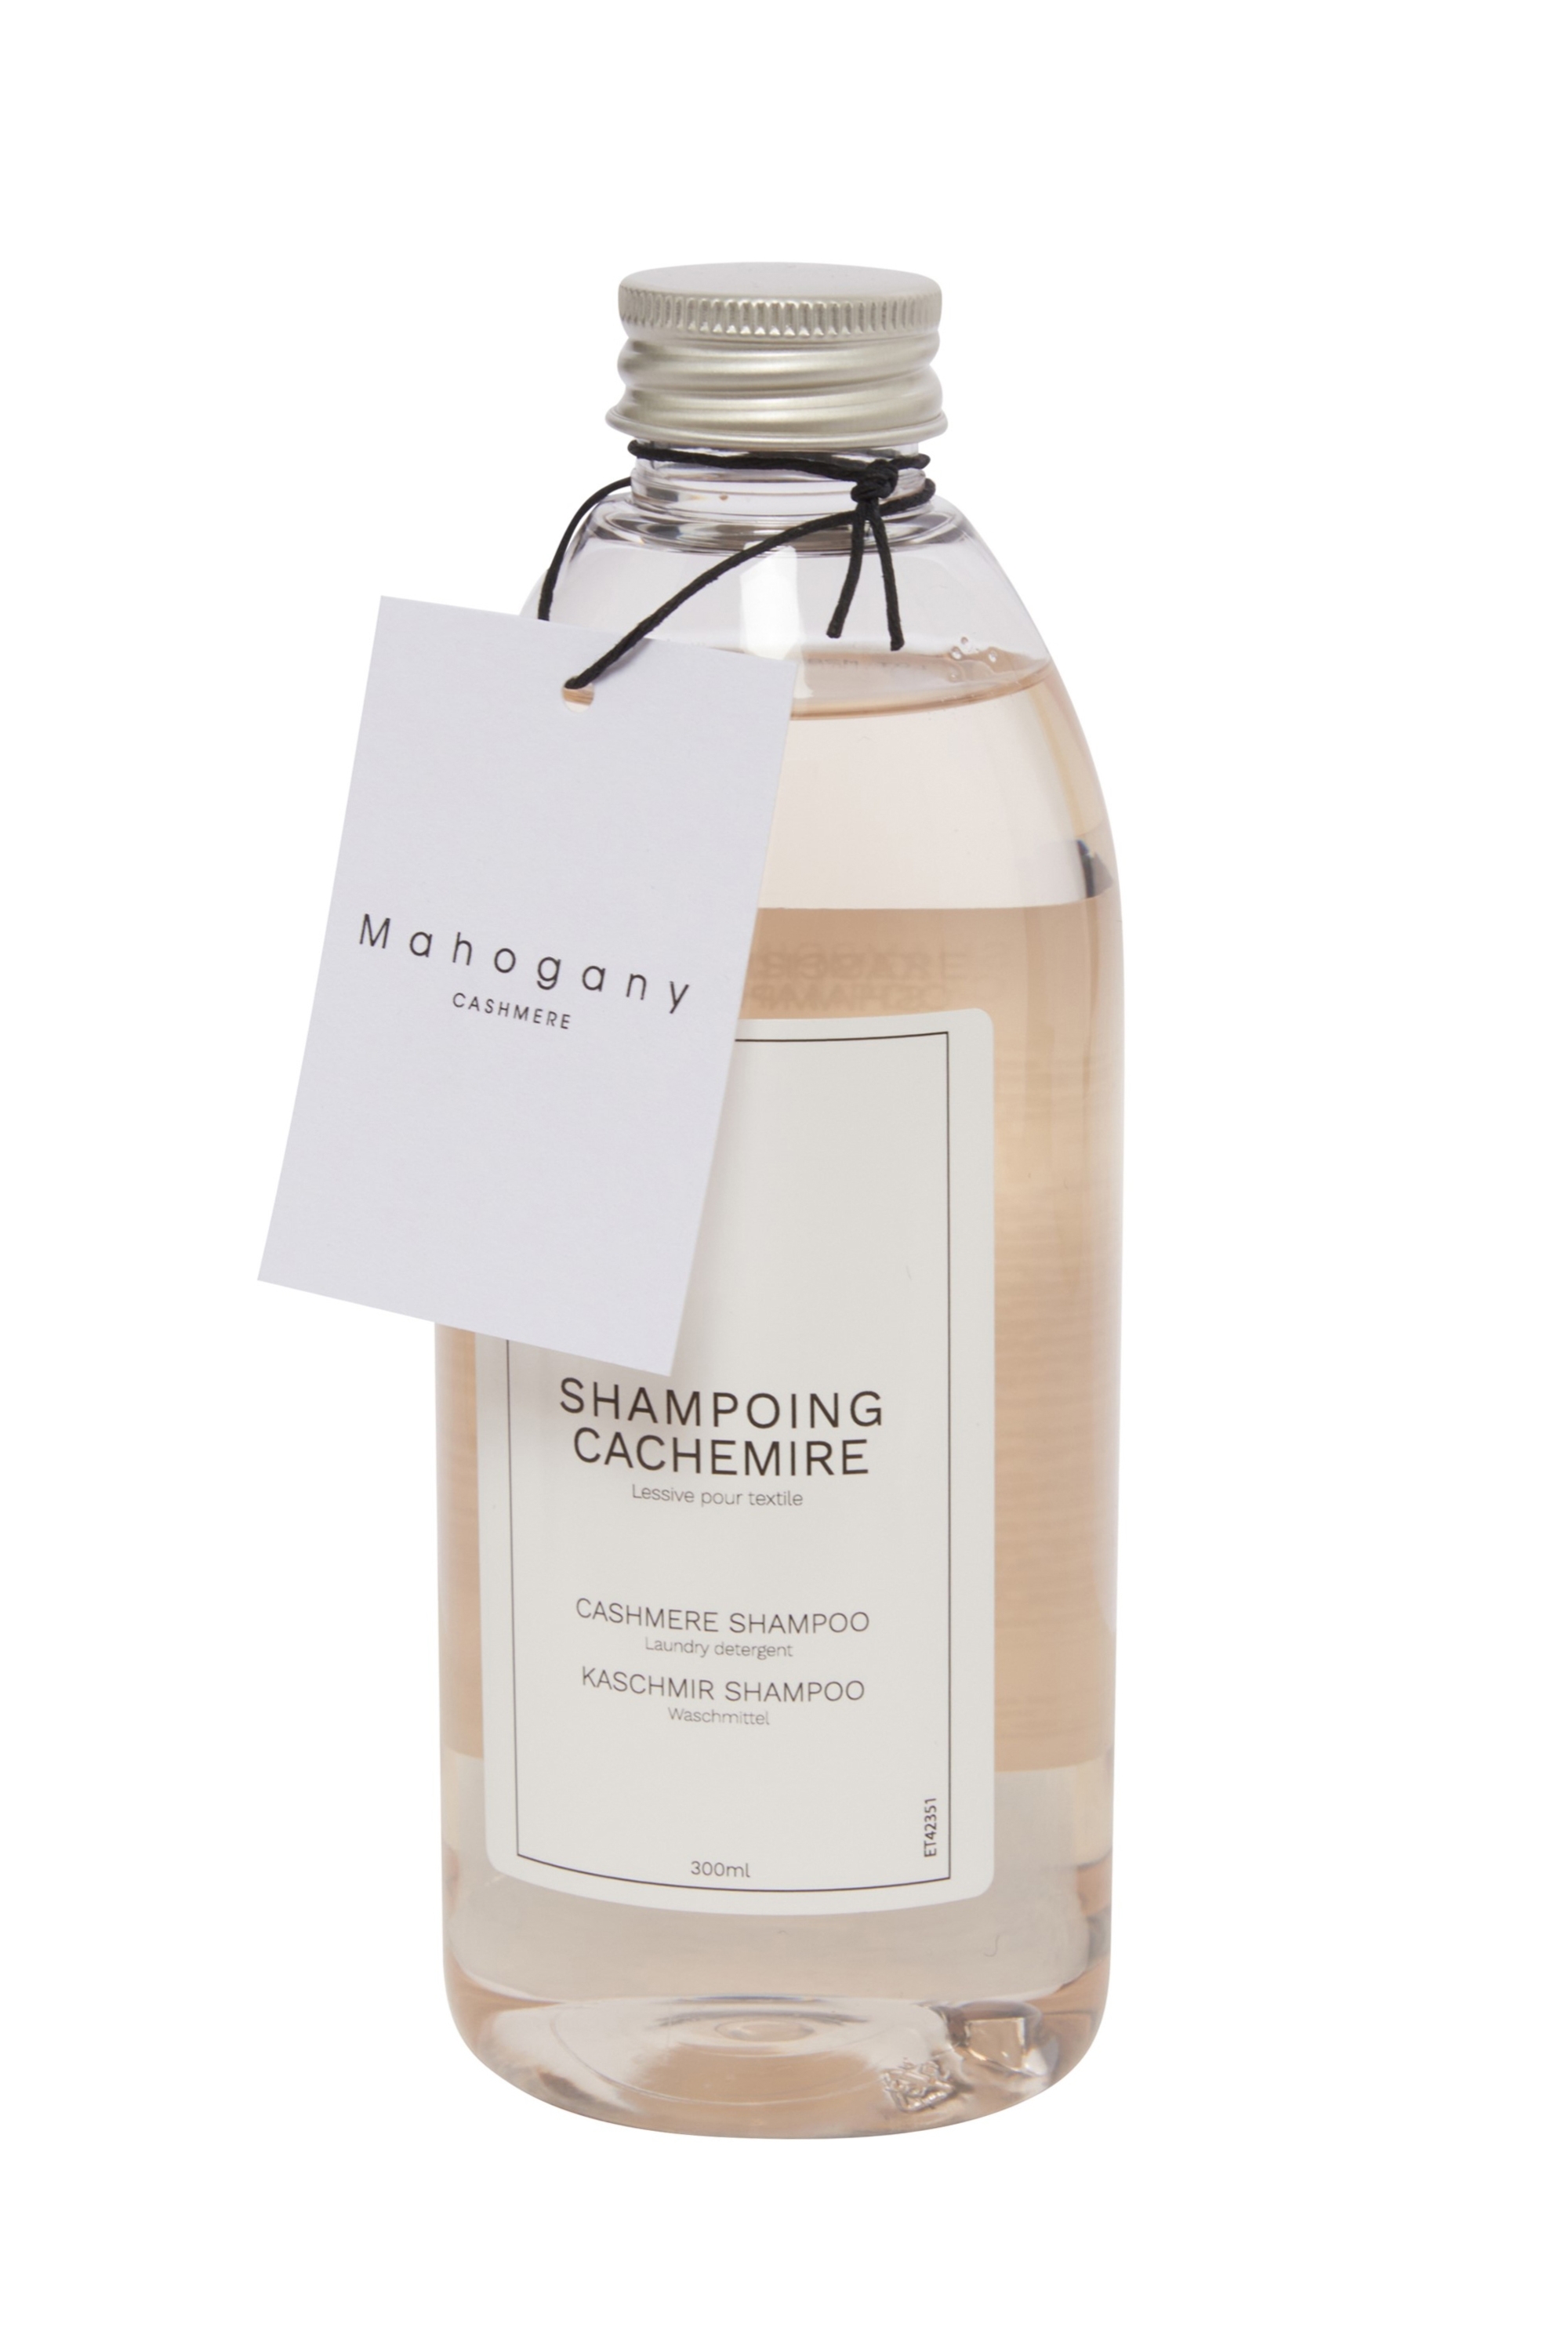 Shampoo accessoires care of cashmere cashmere shampoo natural einheitsgrouml sze